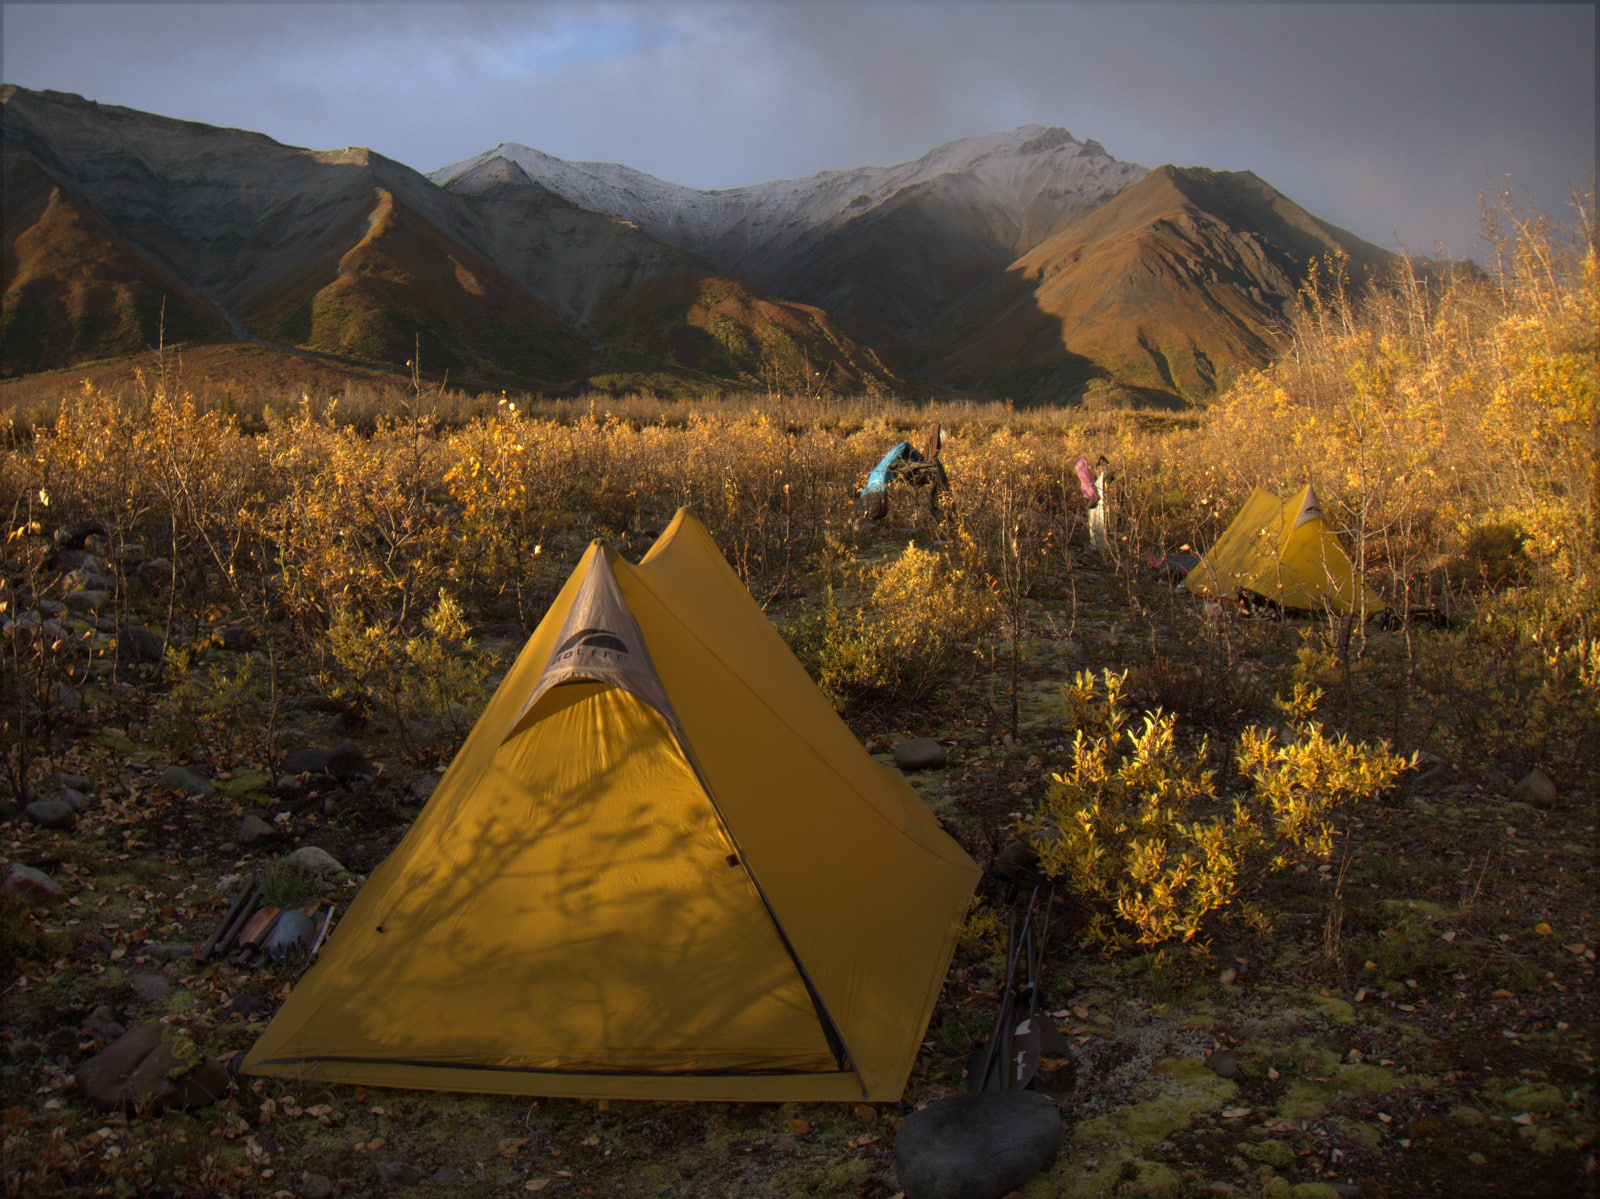 For Sale: new GoLite Shangri La 2 tent - a lightweight, versatile 